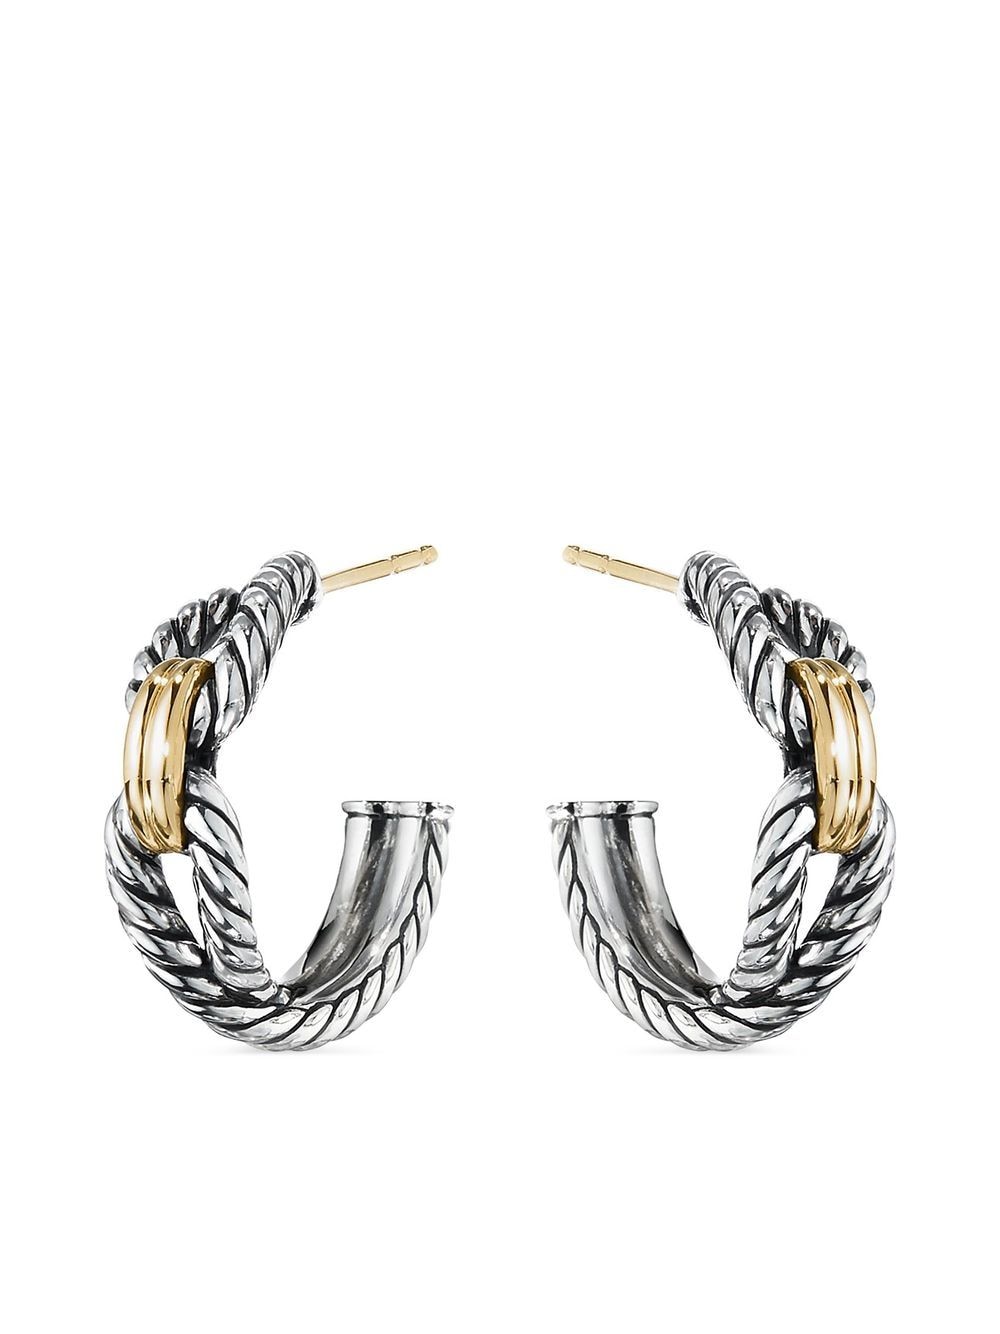 David Yurman 18kt yellow gold and sterling silver Cable Loop hoop earrings von David Yurman